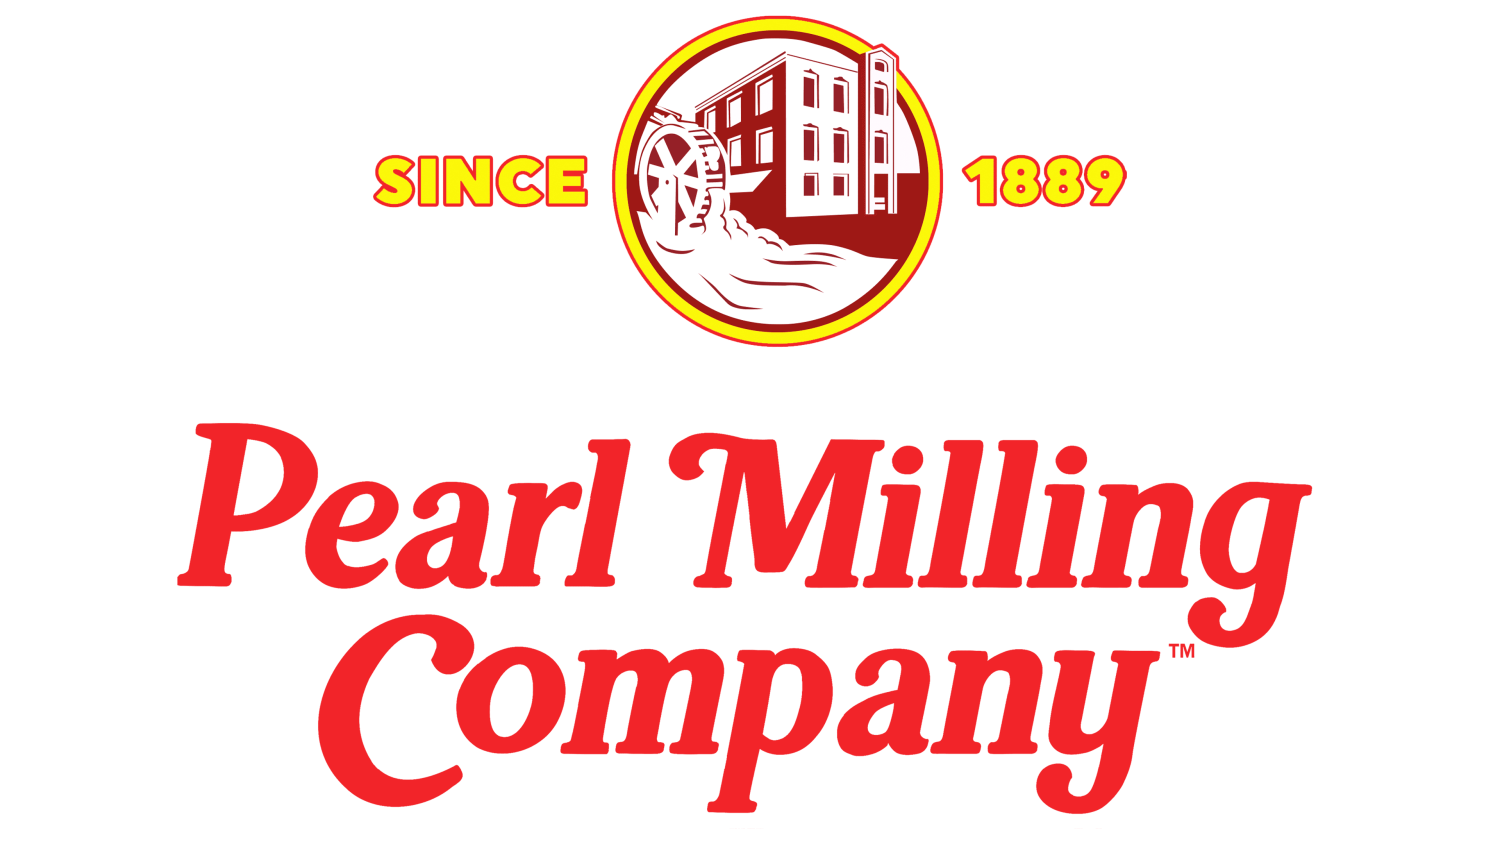 Pearl Milling